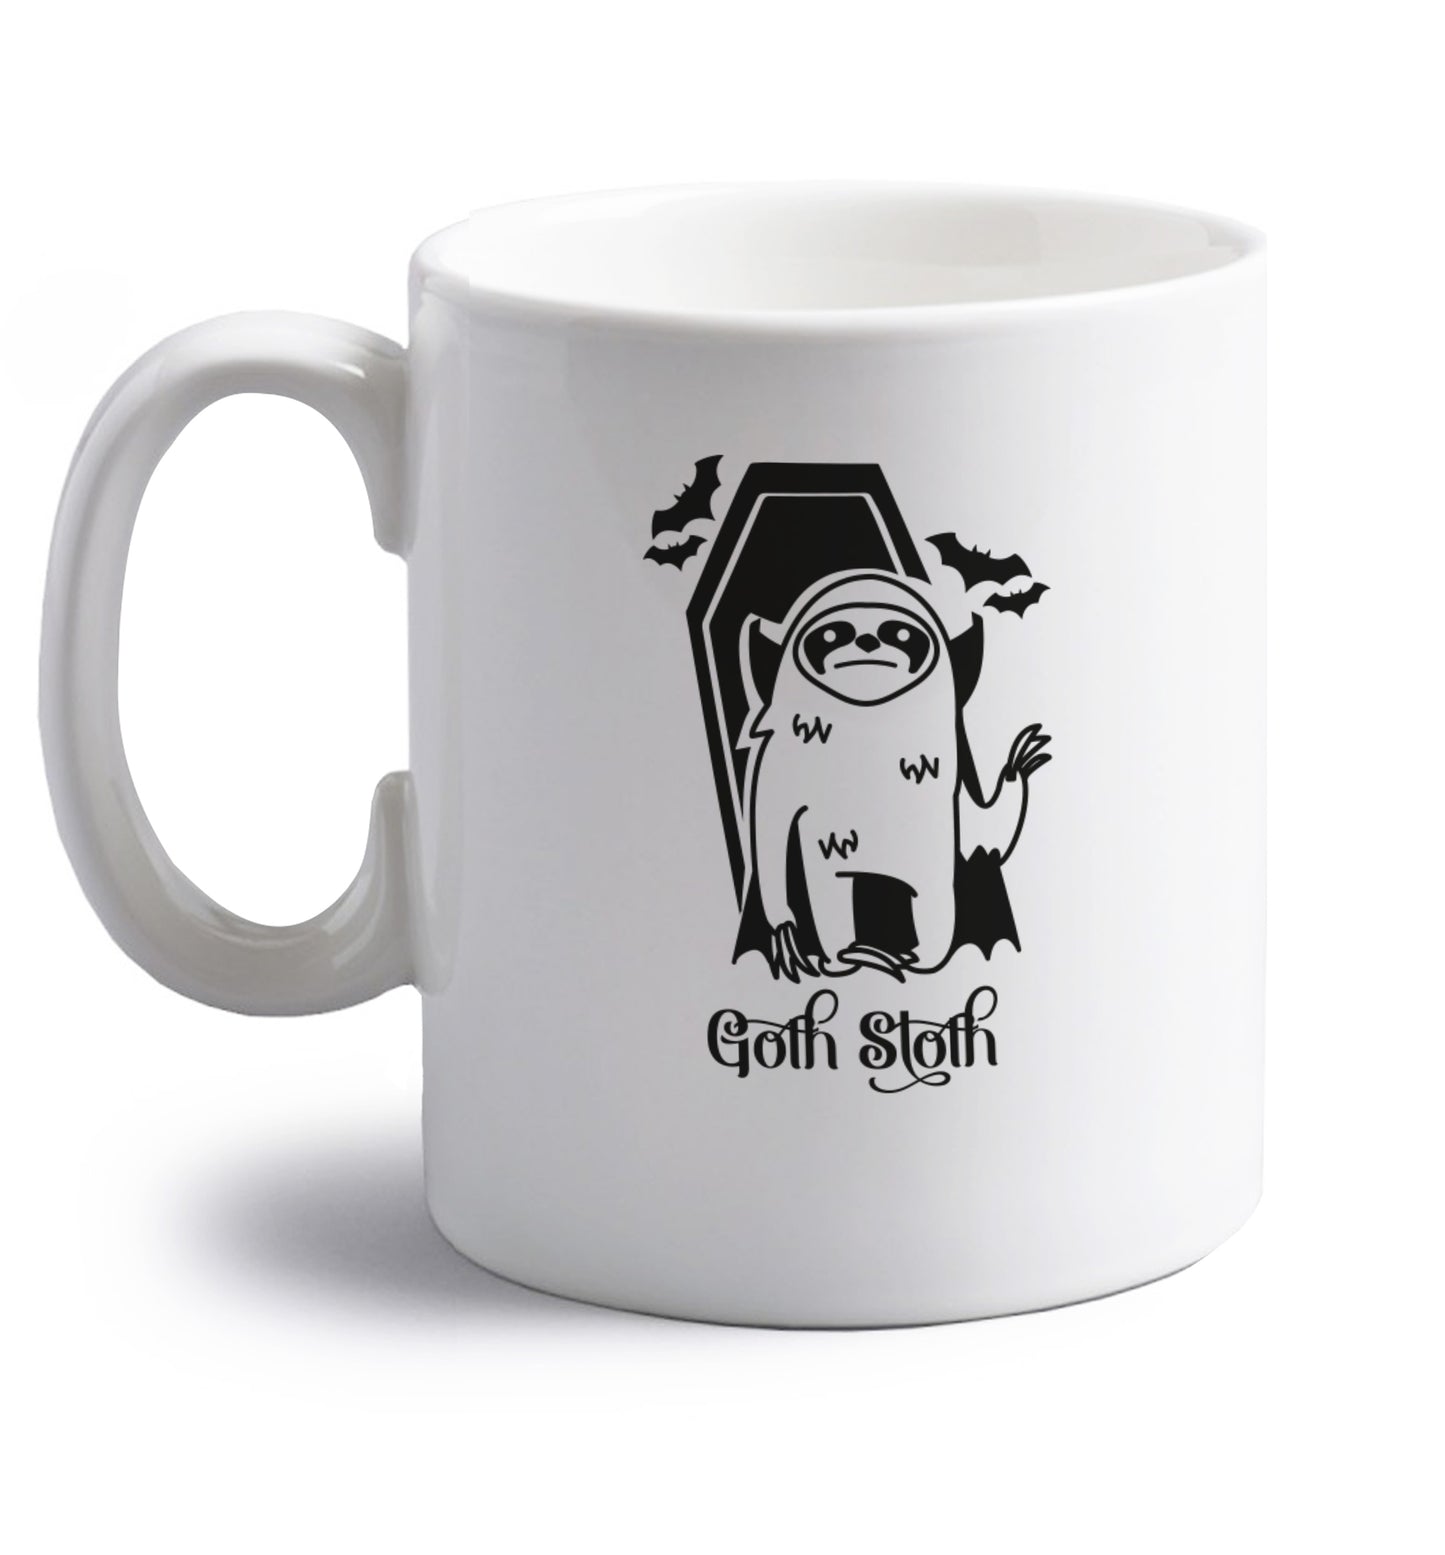 Goth Sloth right handed white ceramic mug 